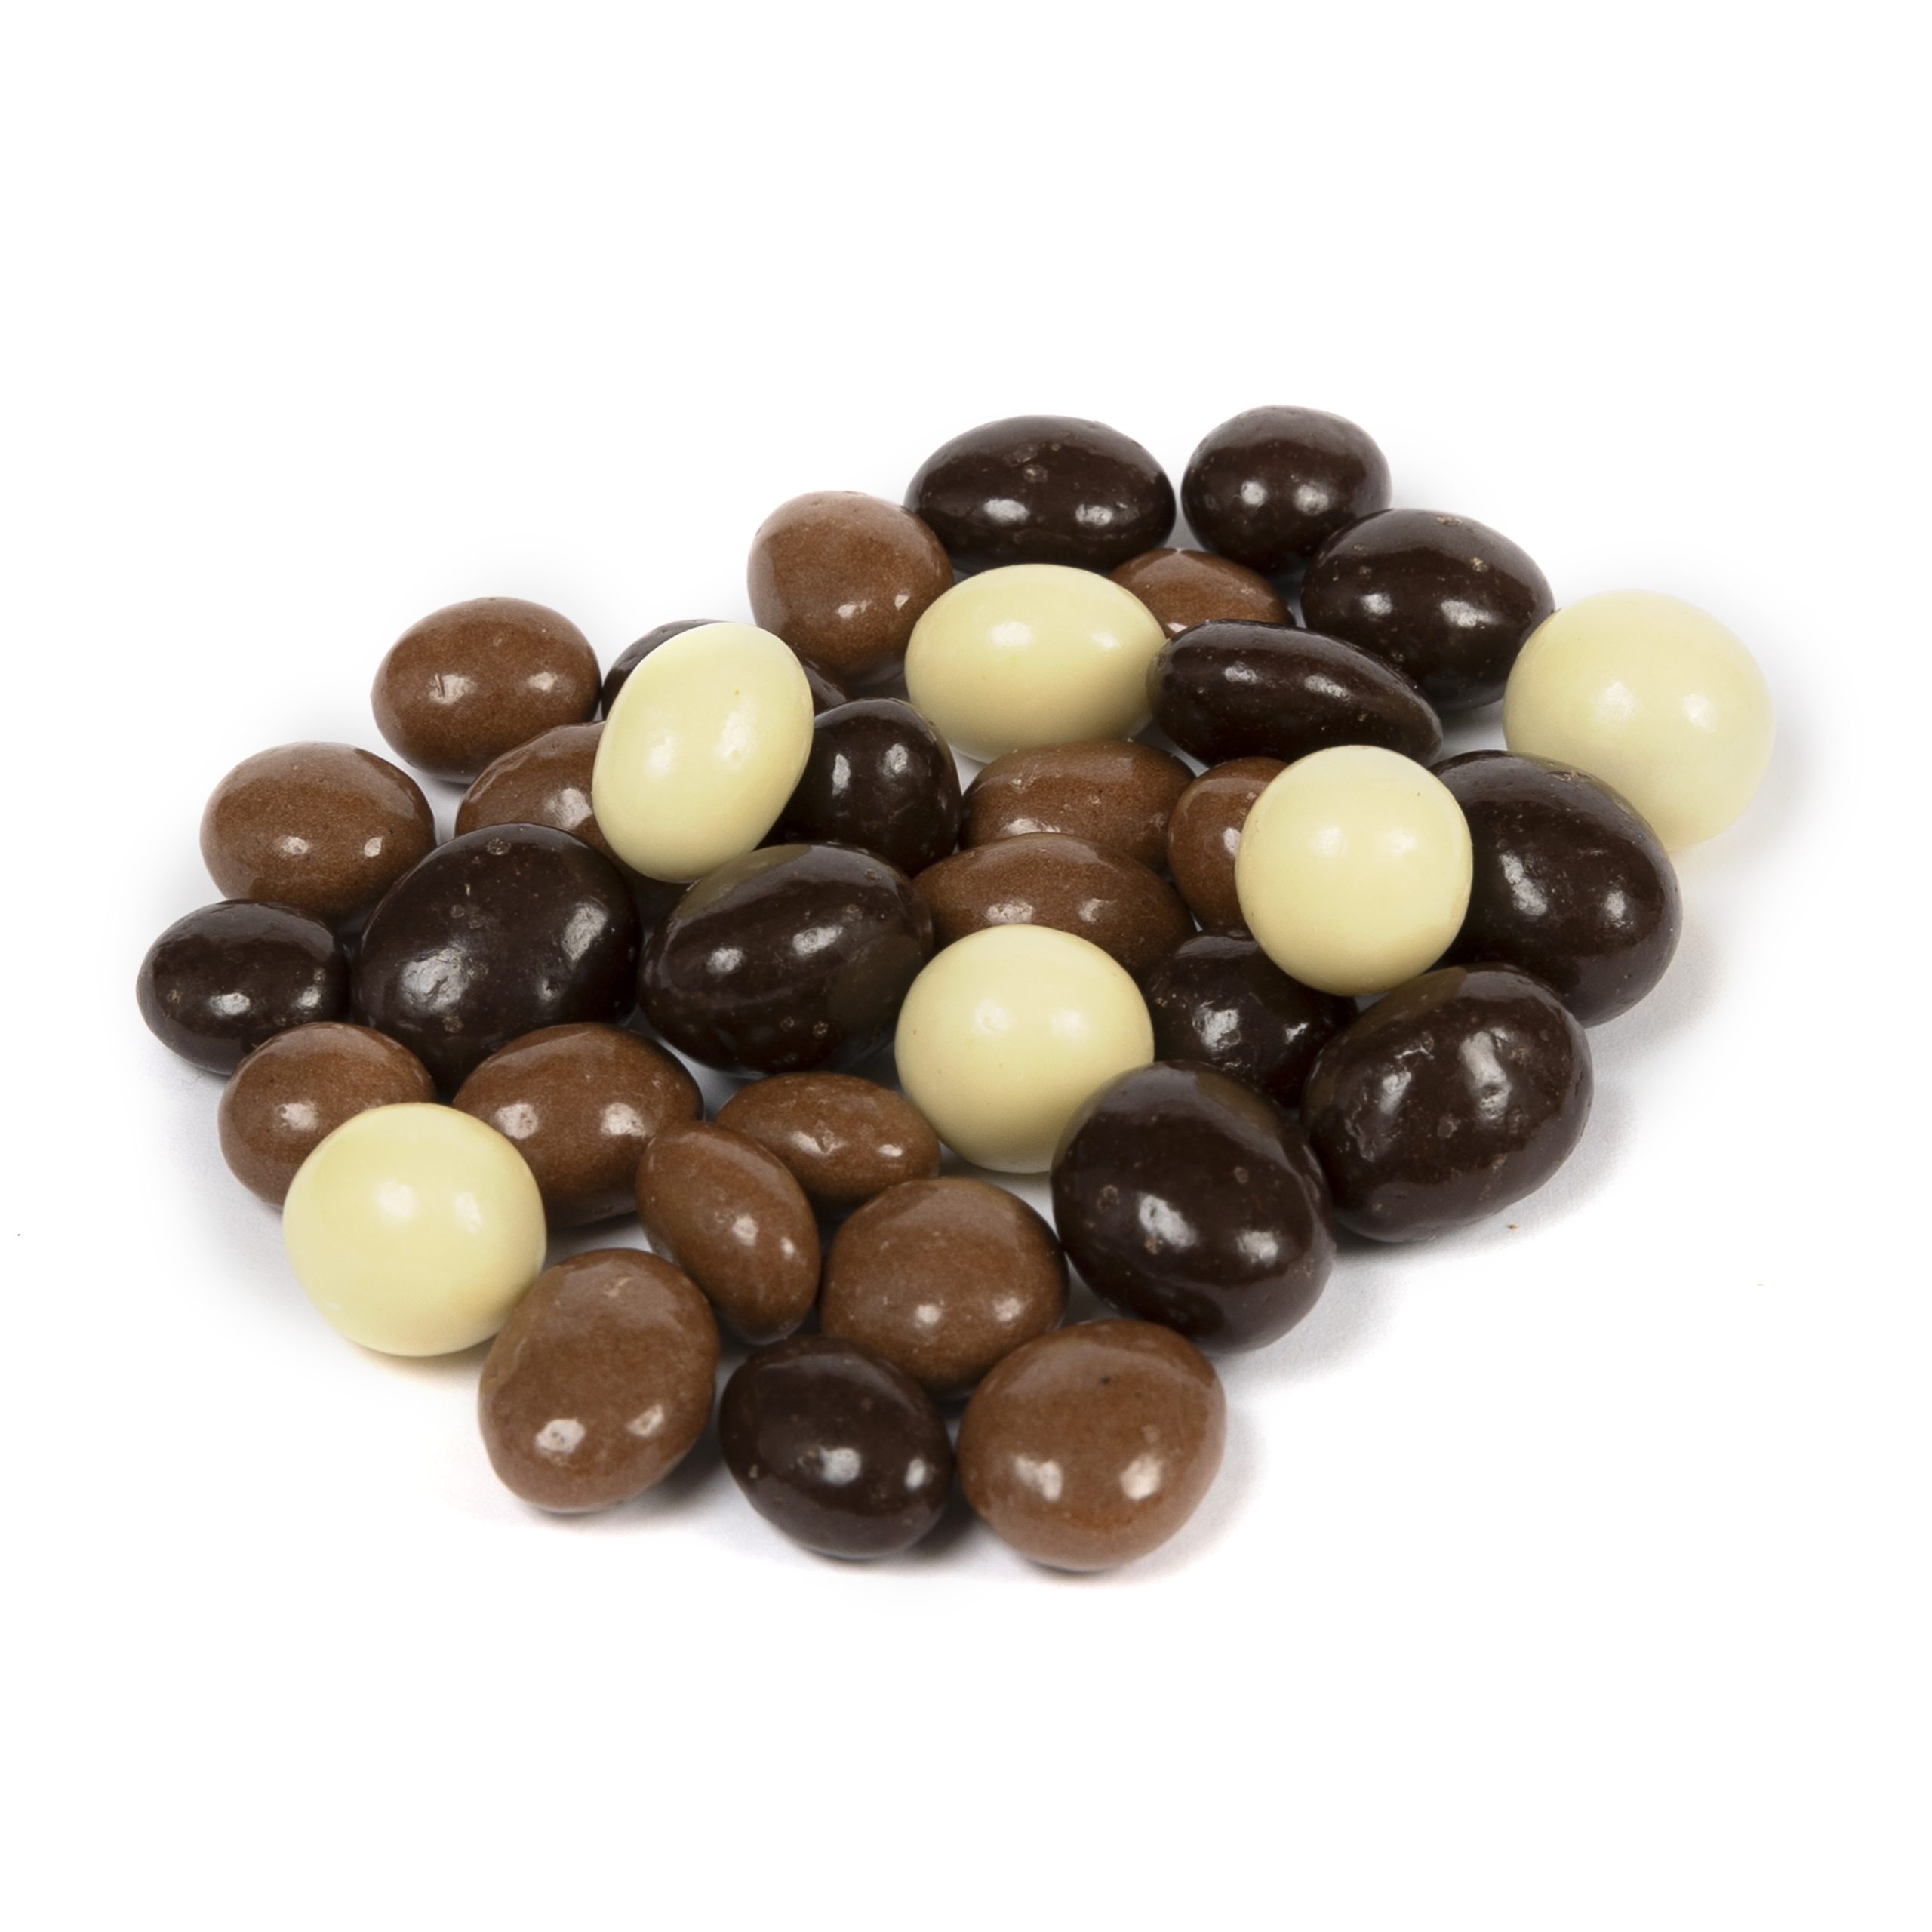 Dorri - Assorted Chocolate Raisins